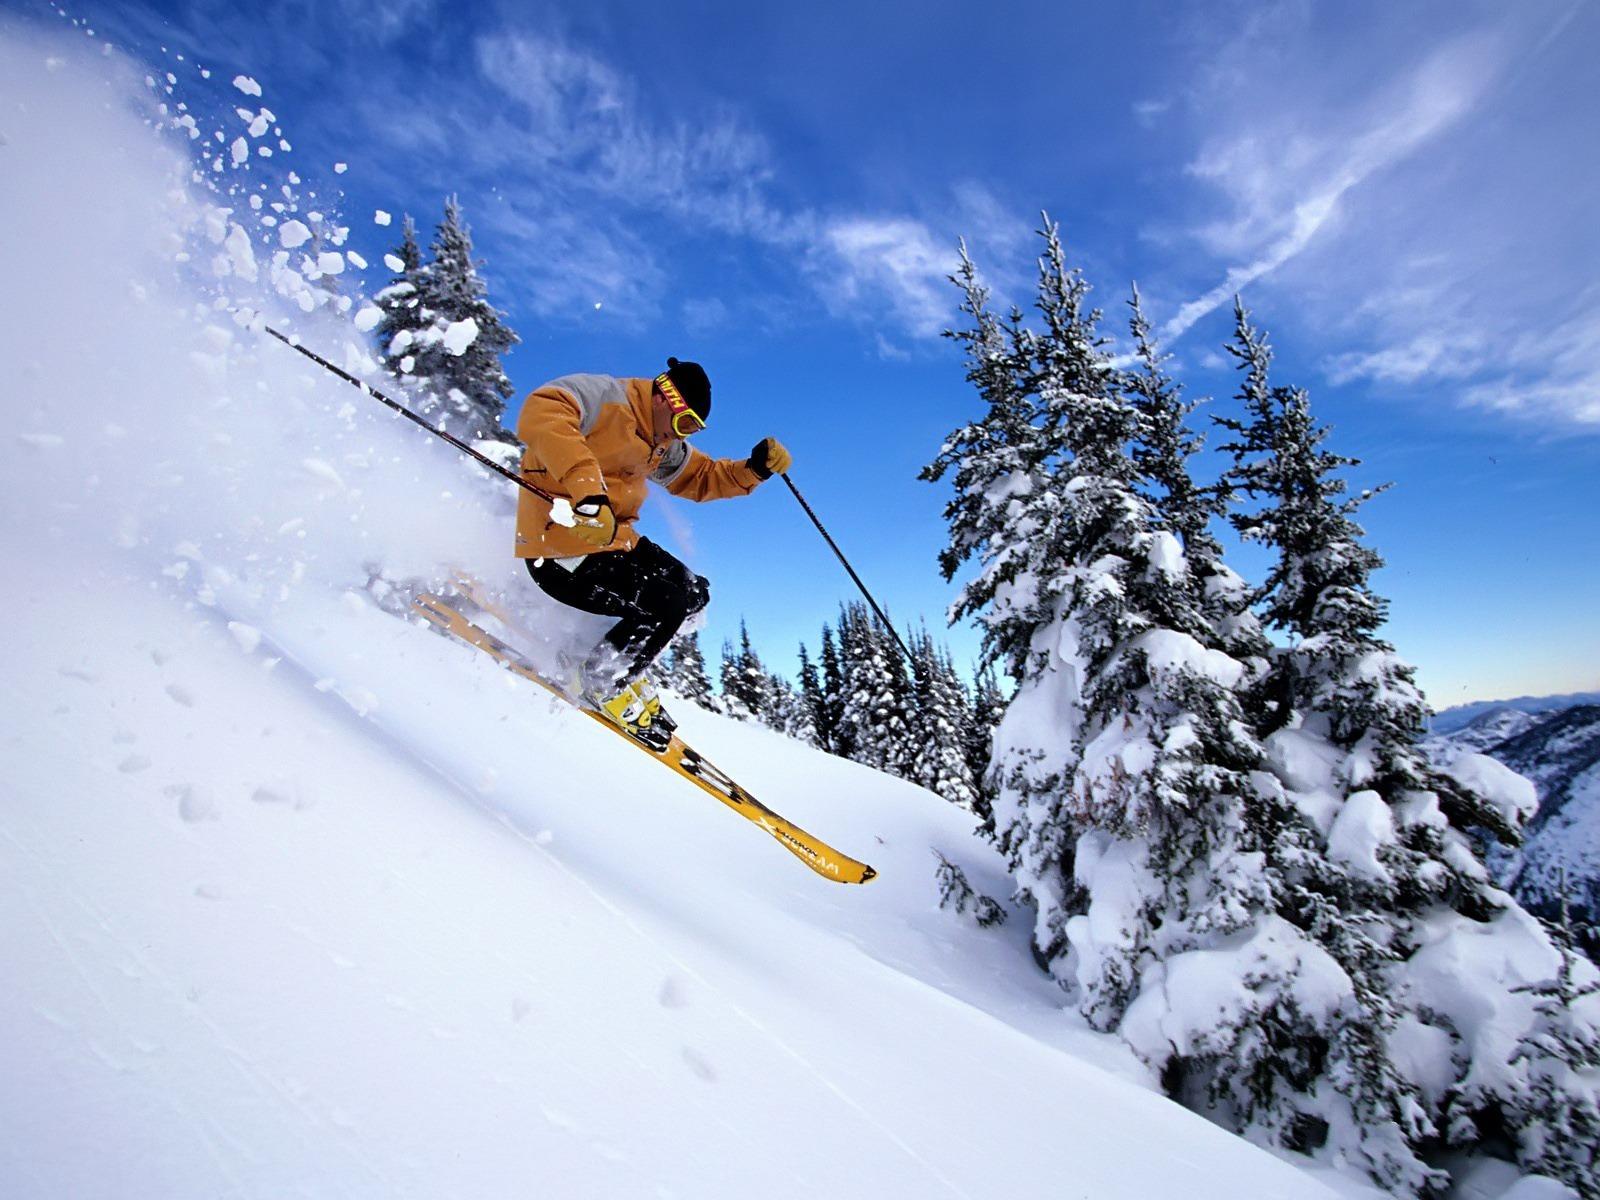 Ski Wallpaper Ski Sports Wallpaper in jpg format for free download